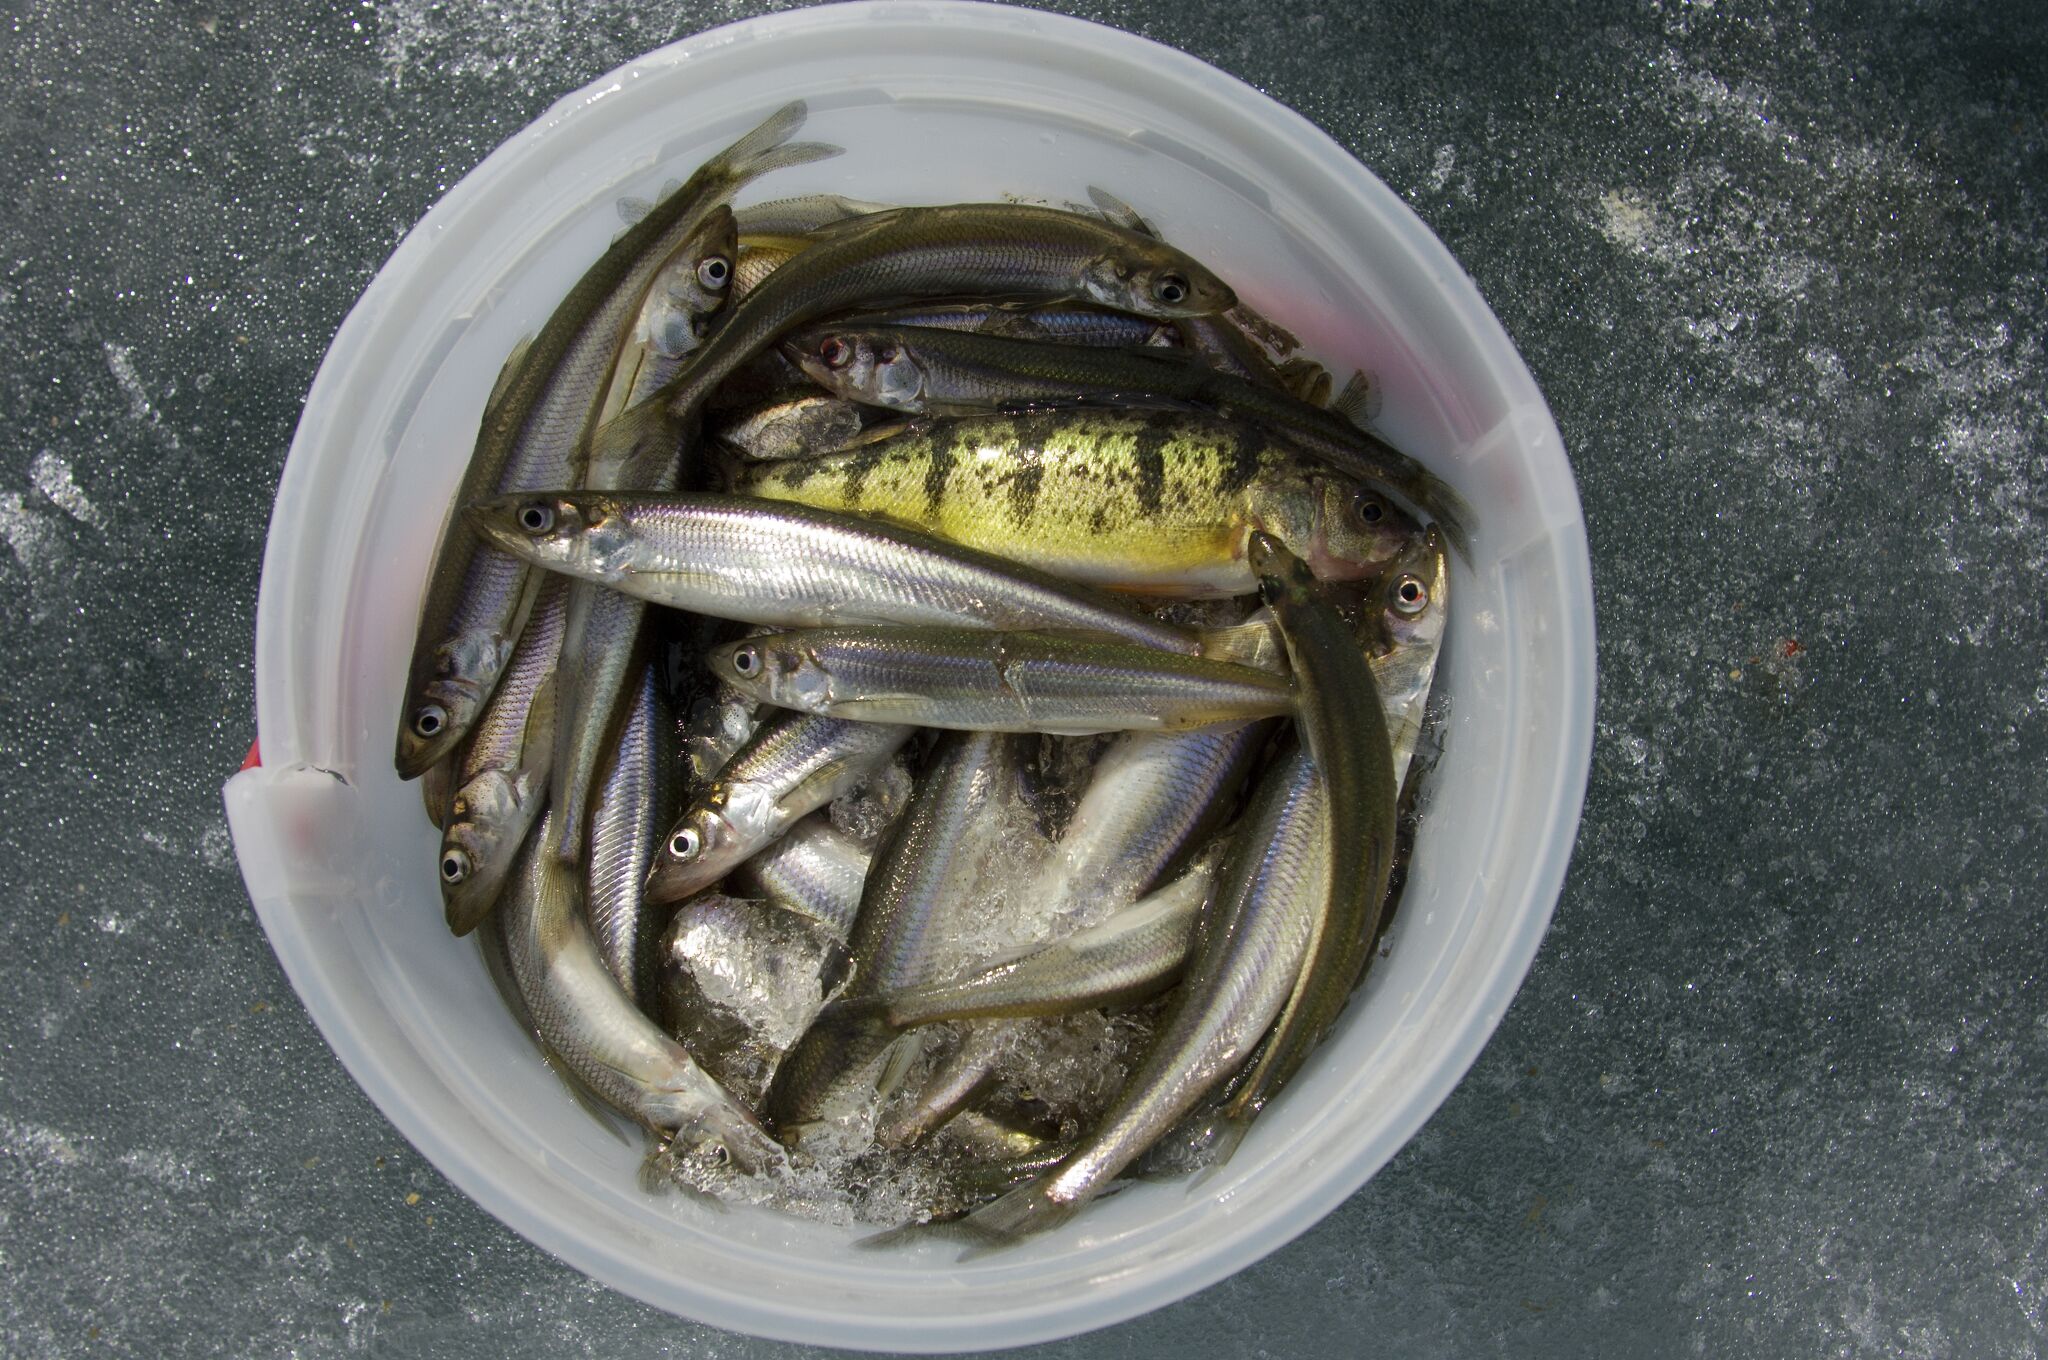 Fish eating advisories warn of PFAS chemical in Lake Michigan